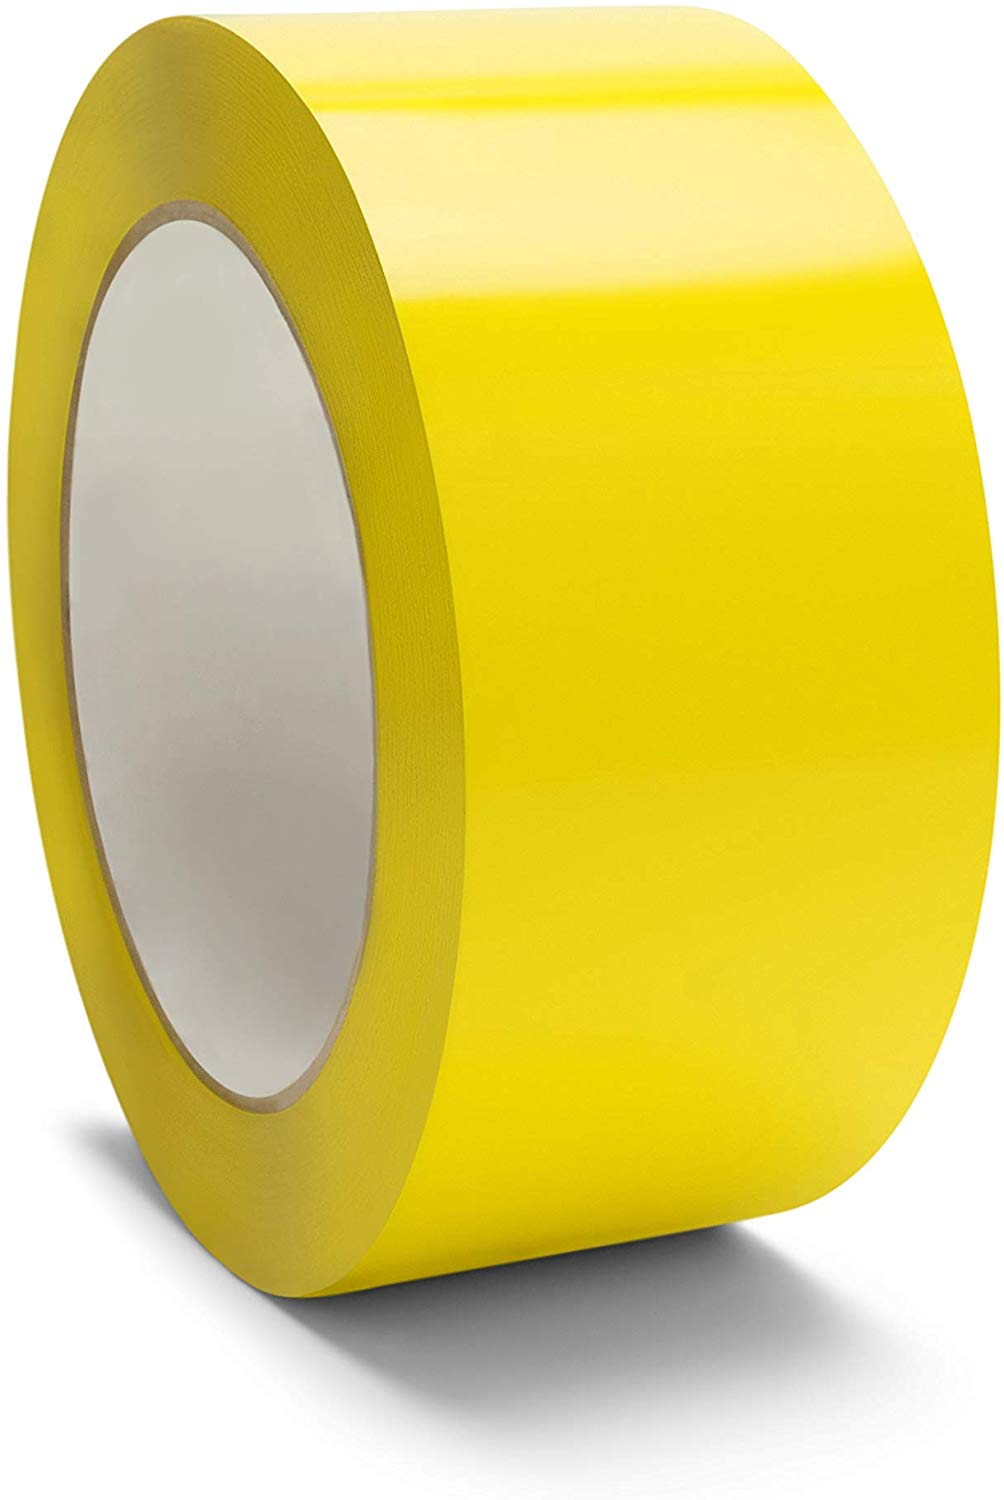 Carton Sealing Tape, 2&quot; x
1.9M x 110YD, Yellow, Acrylic,
(36 Rolls/Case) (Case)